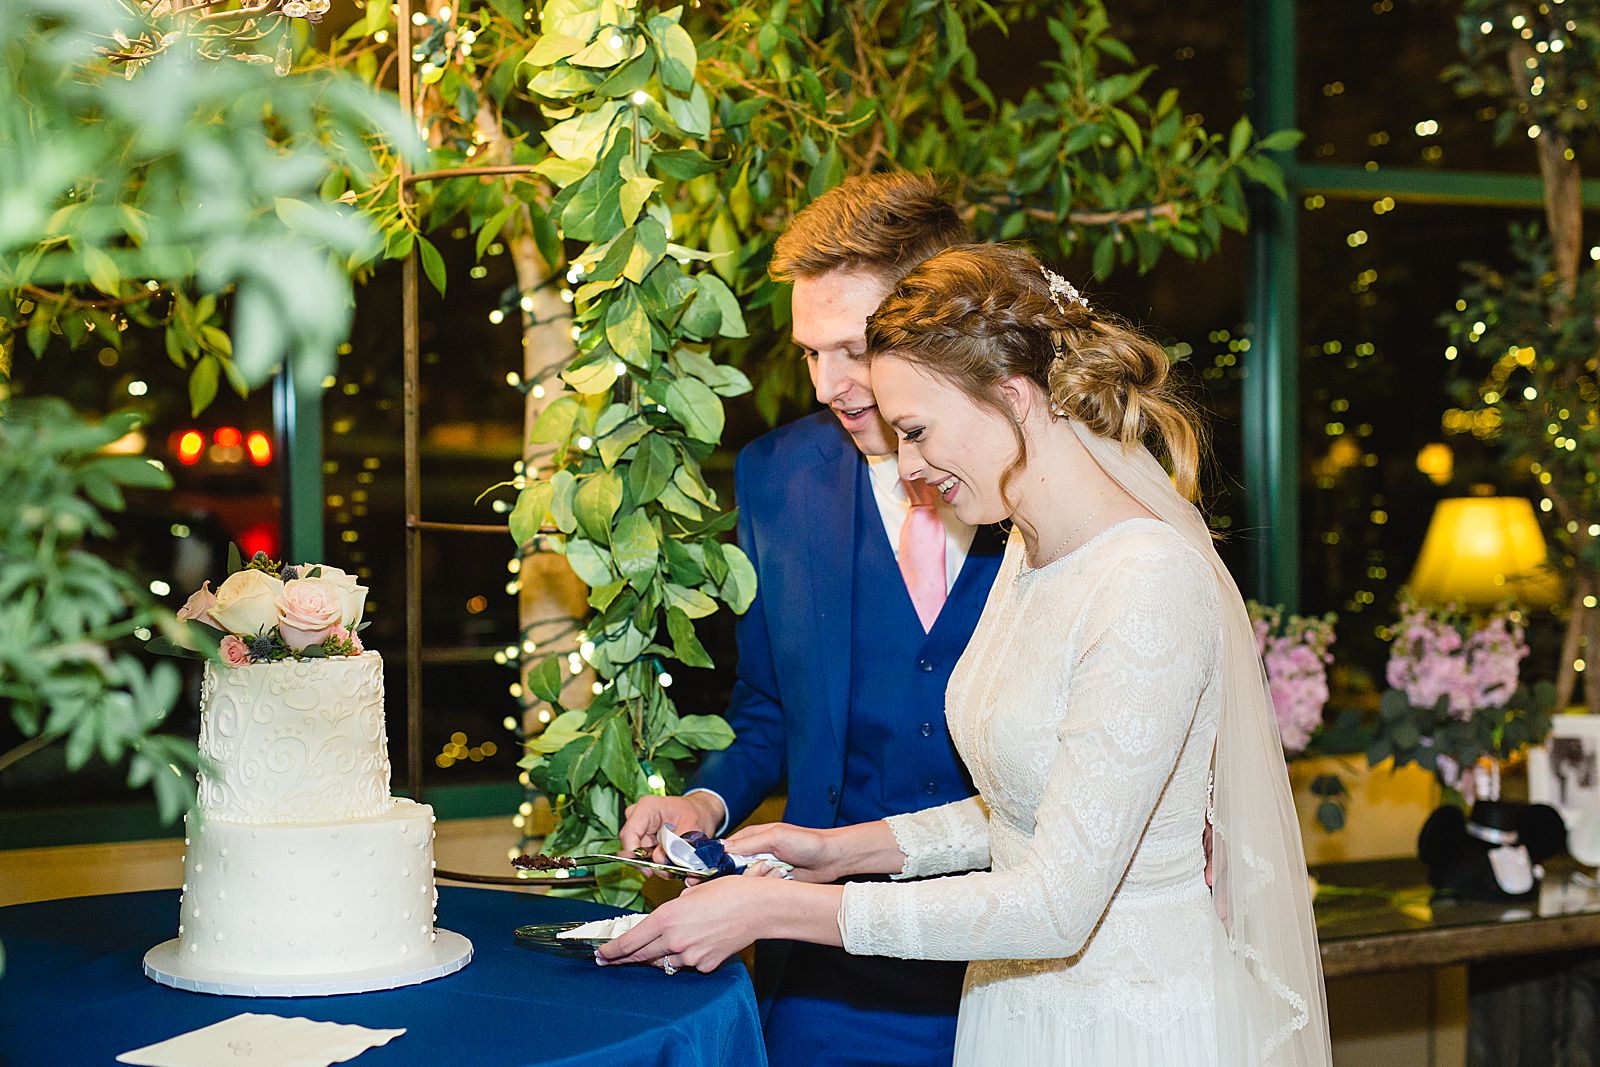 Utah Winter Bride | Cake Cutting | Wedding Reception 